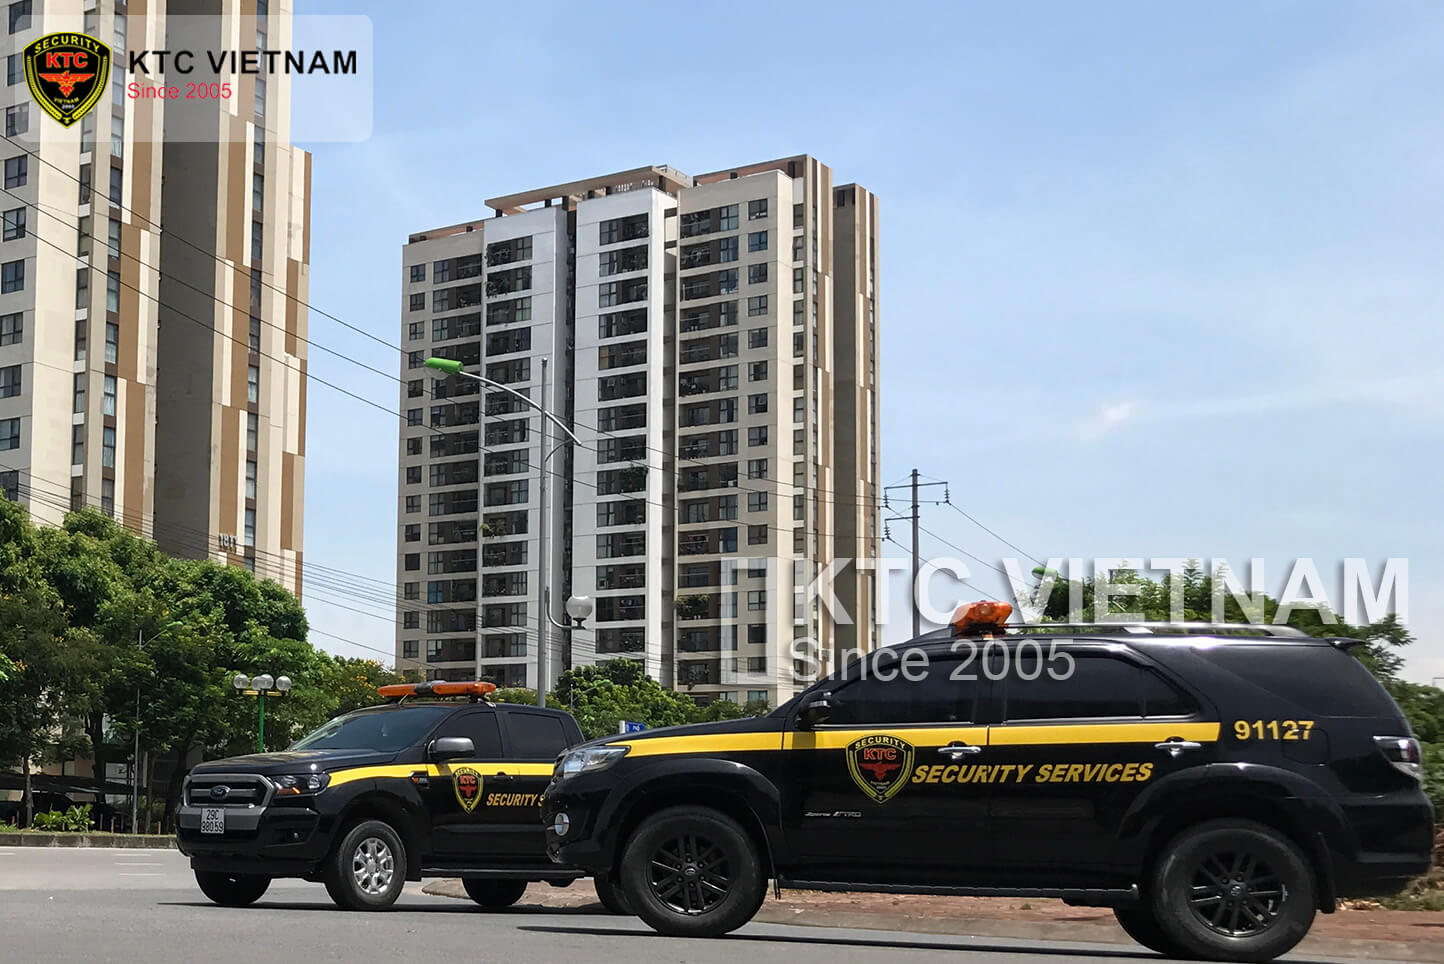 KTC Vietnam’s Vehicles and Security Equipment